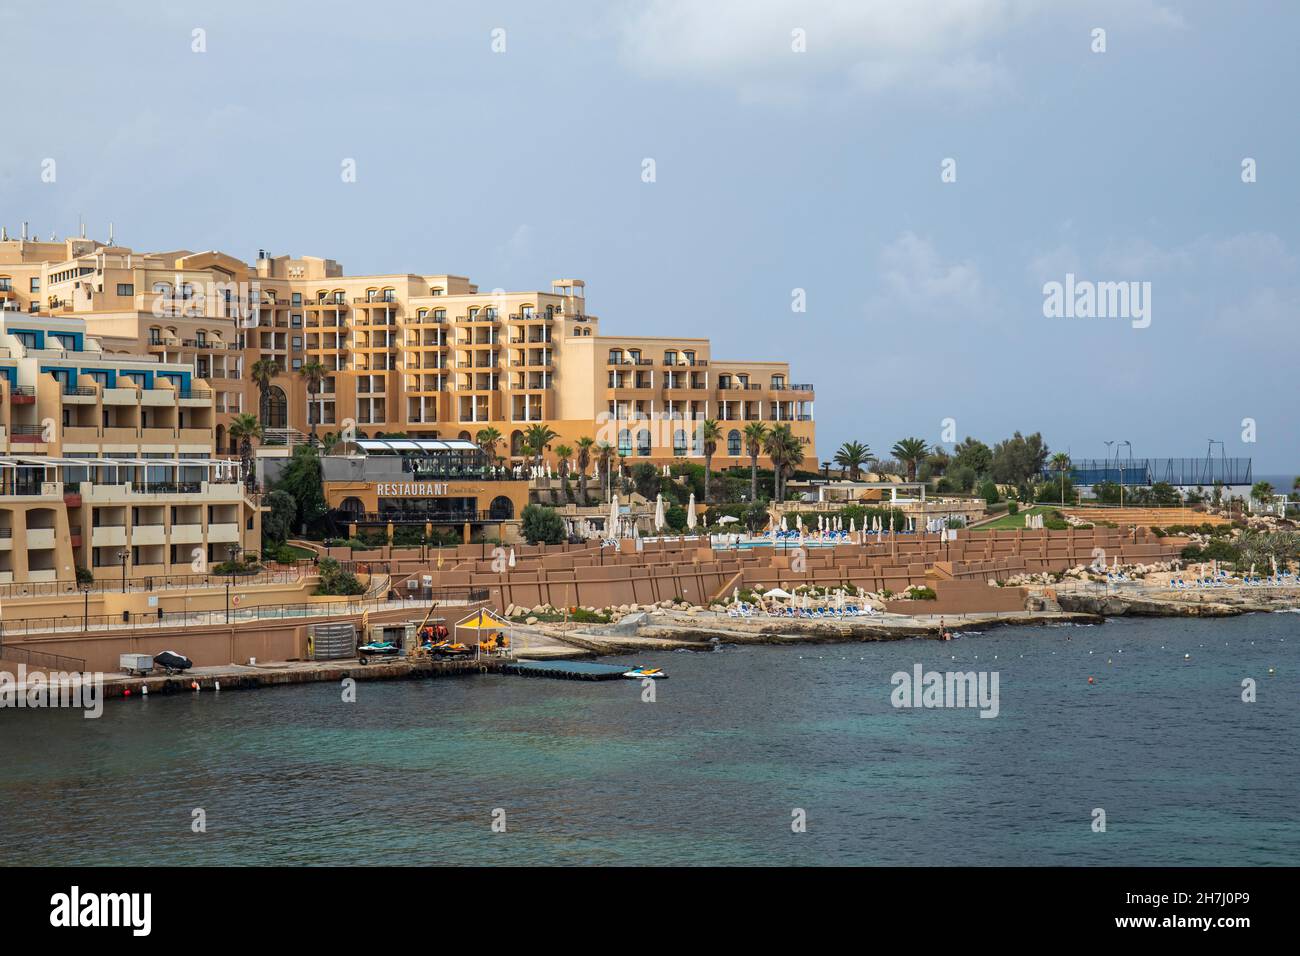 The Corinthia Hotel a five-star luxury hotel in St Georges Bay, Saint Julian's, Malta, Europe Stock Photo